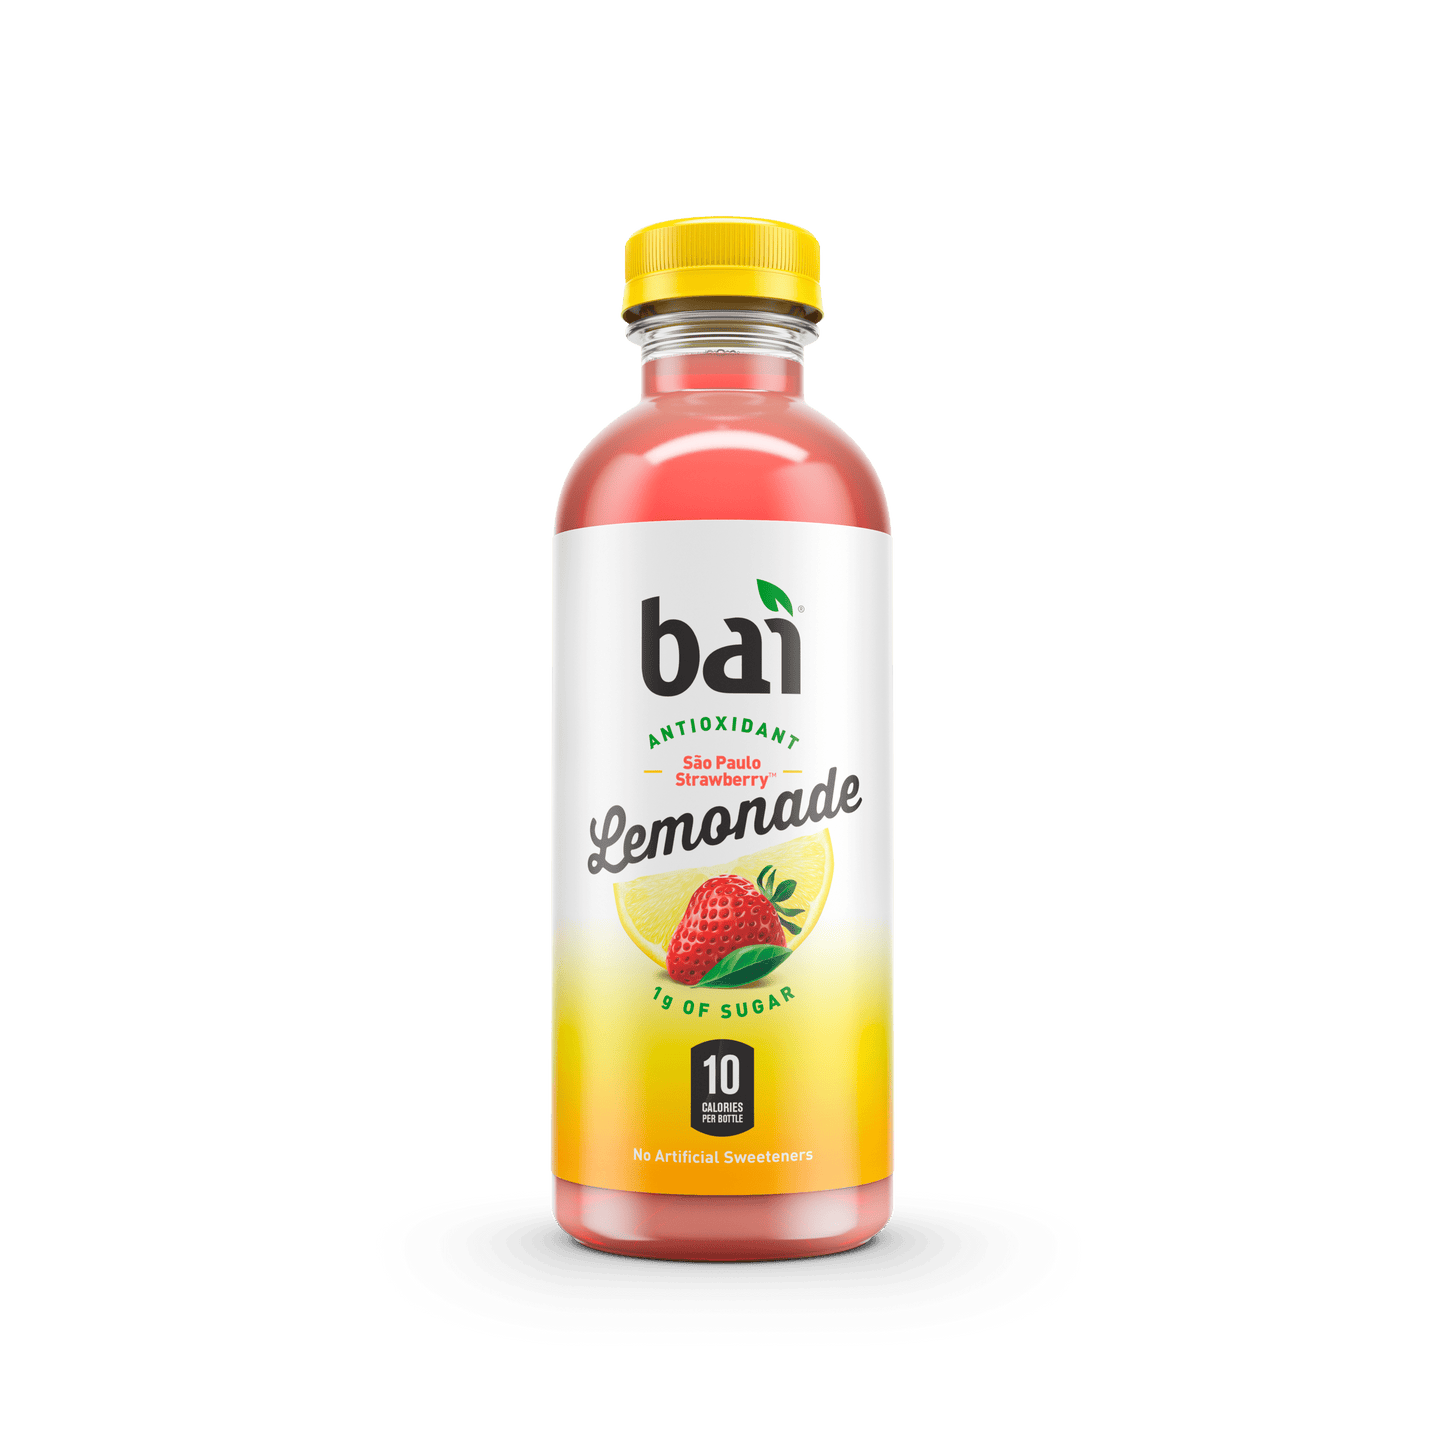 Bai Sao Paulo Strawberry Lemonade Antioxidant Infused Flavored Water, 18 fl oz, Bottle